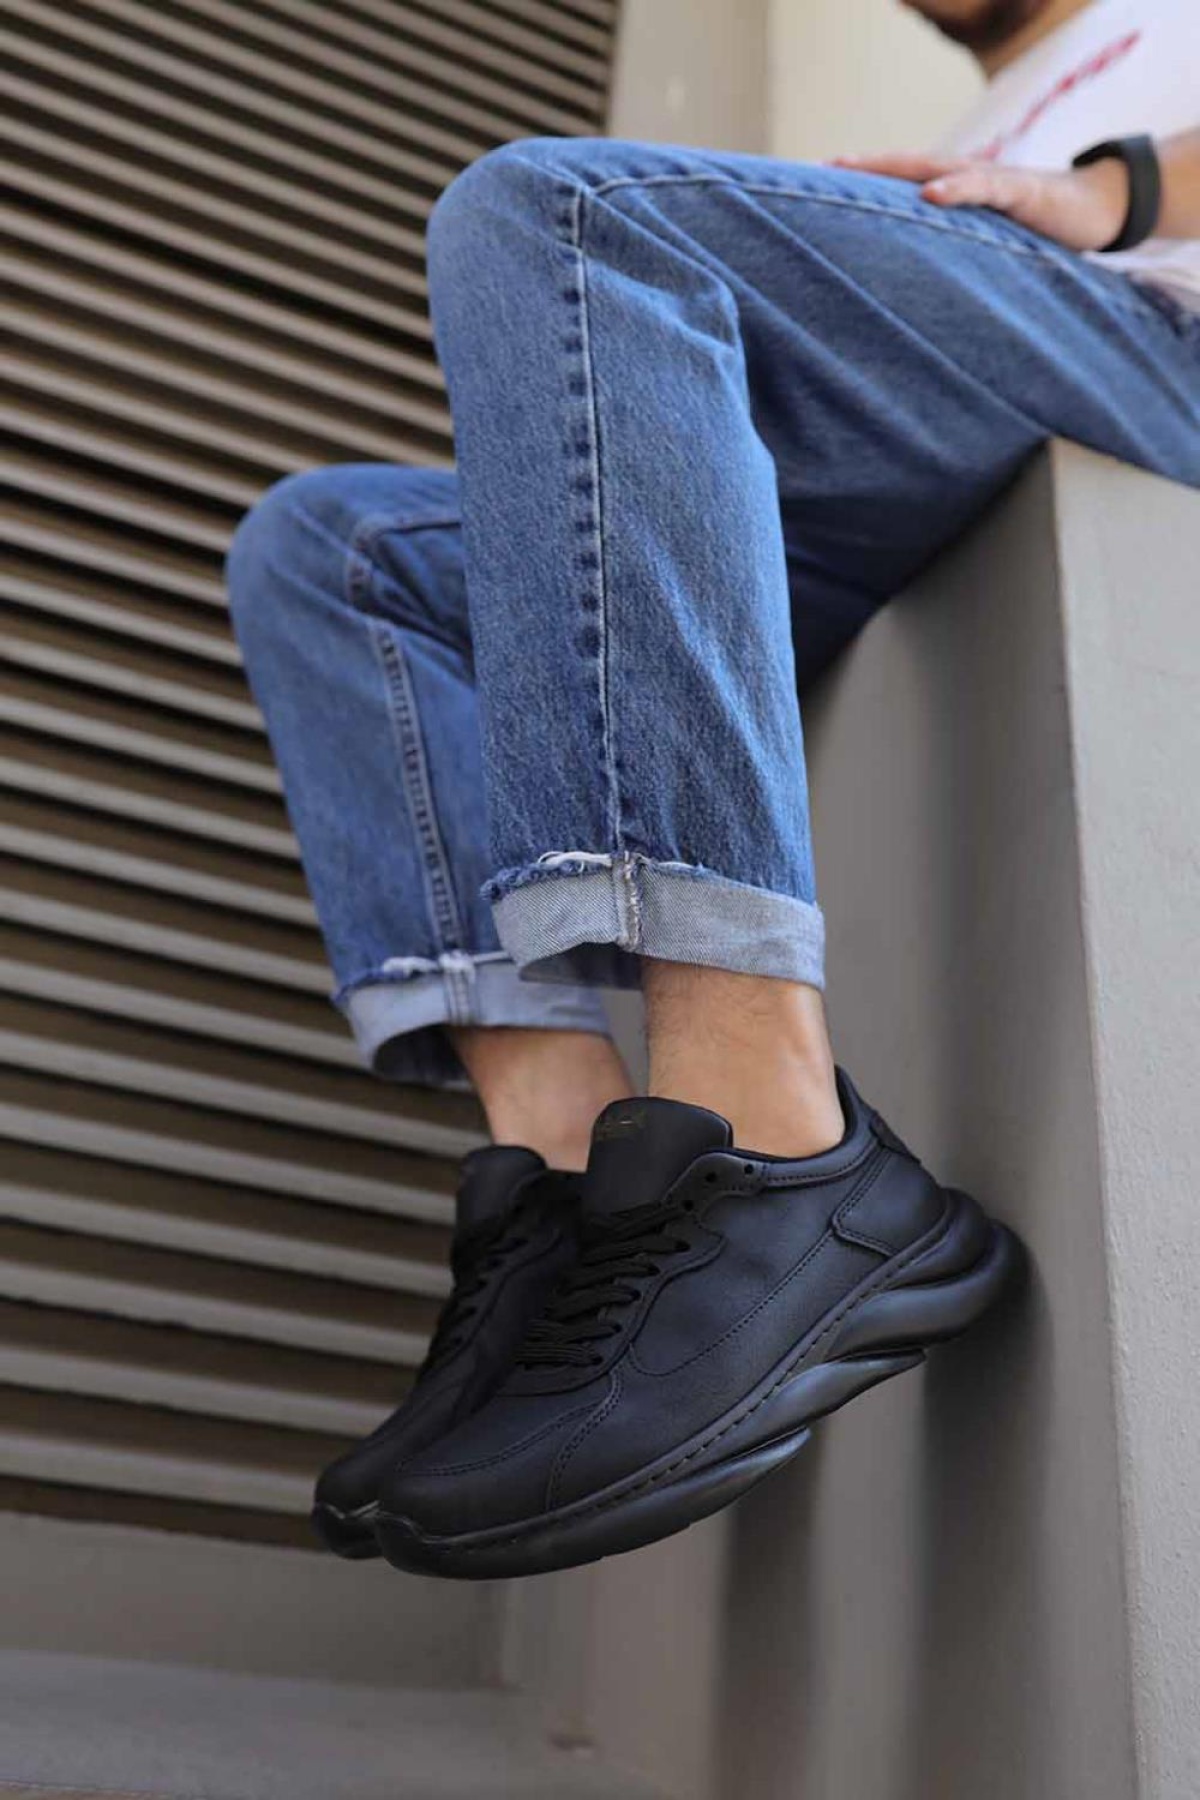 Knack Sneakers Ayakkabı 065 Siyah (Siyah Taban)